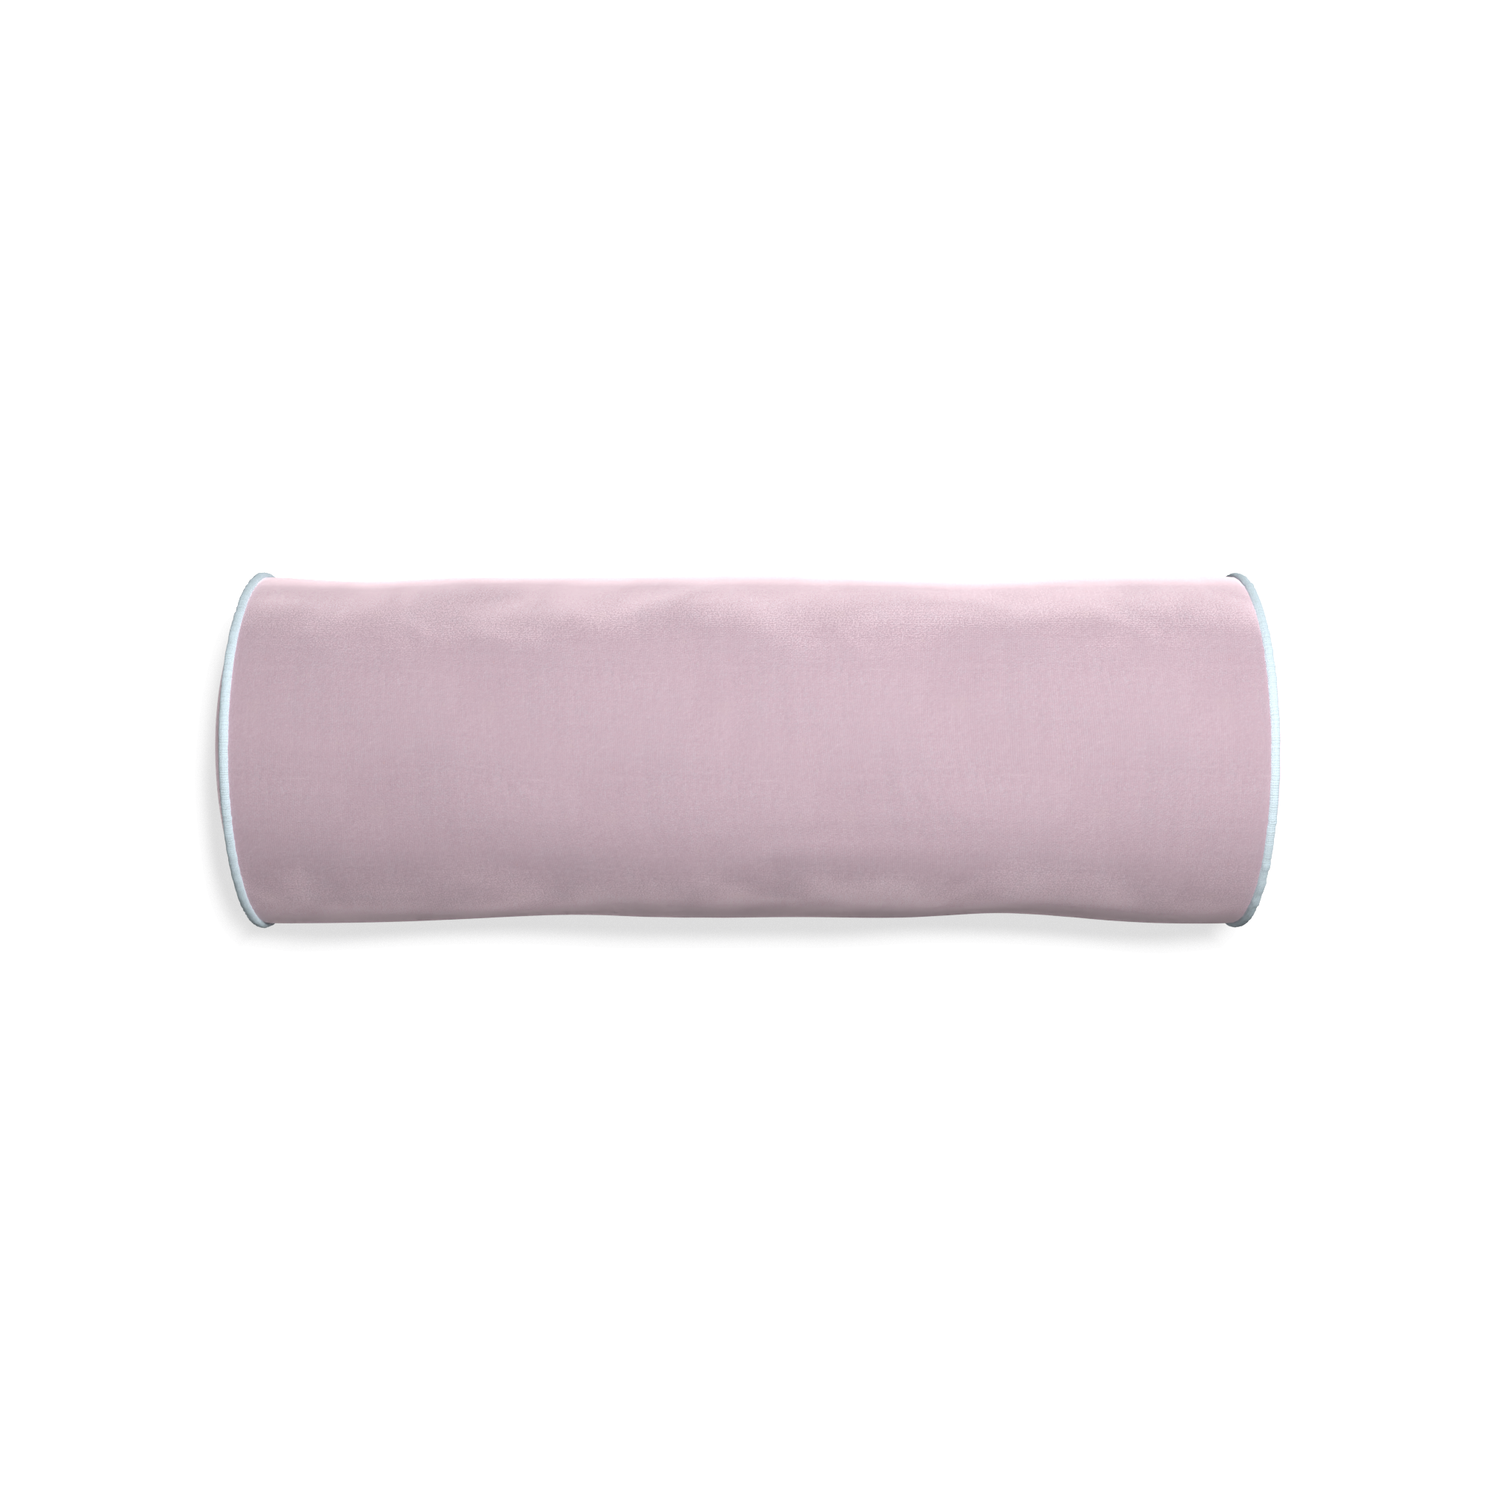 bolster lilac velvet pillow with light blue piping